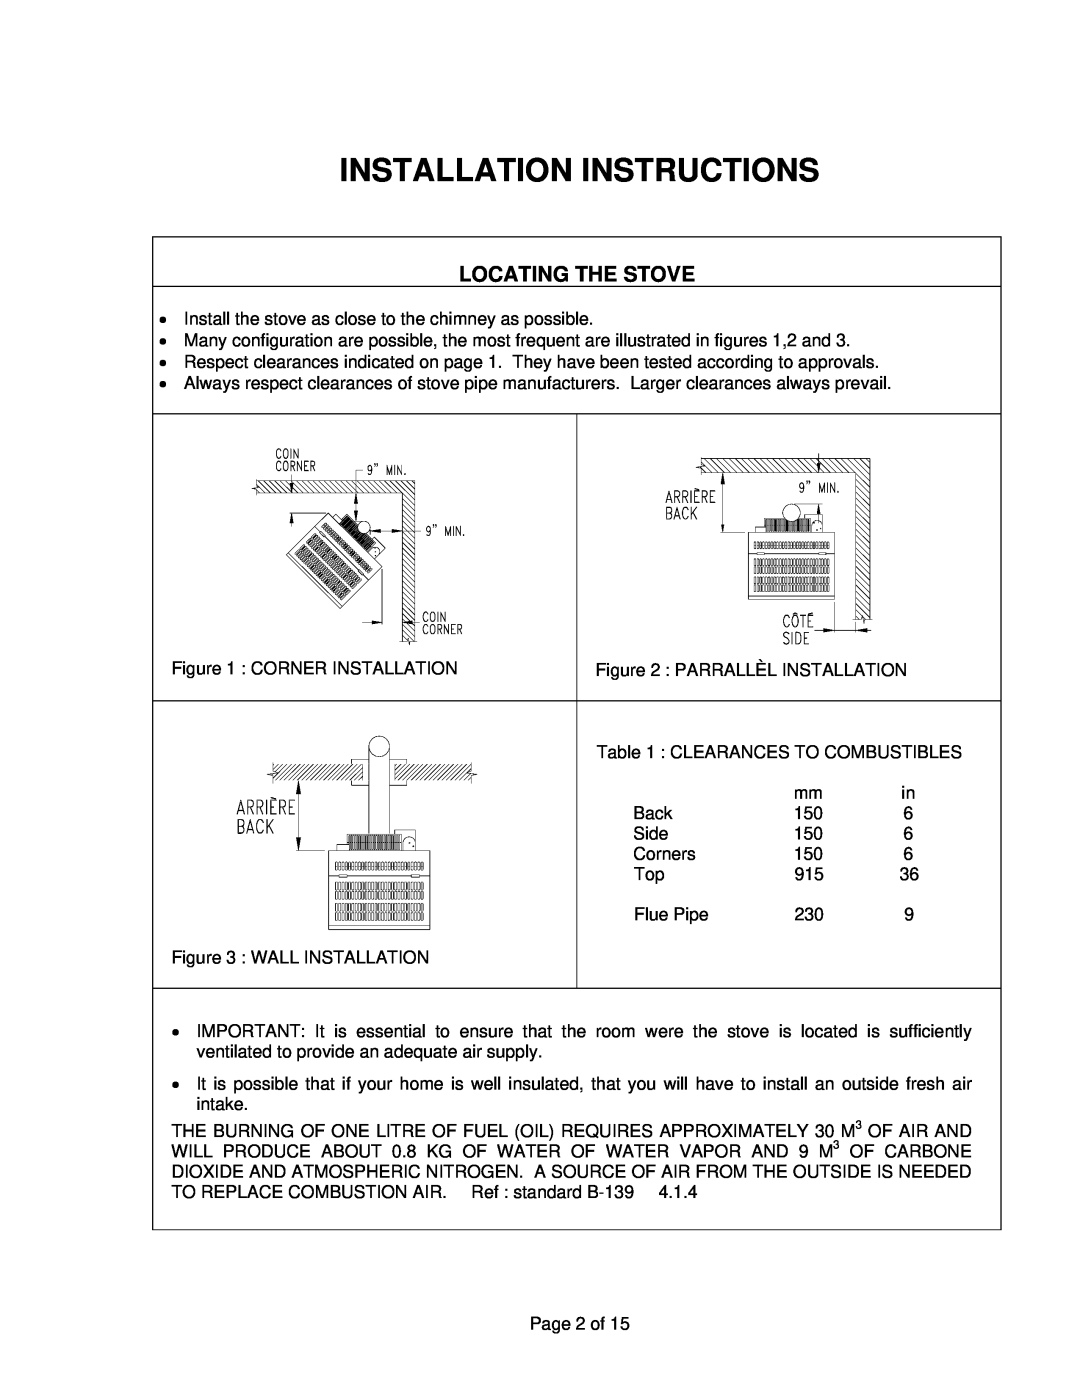 Drolet ALASKA 2000 manual Installation Instructions, Locating The Stove 